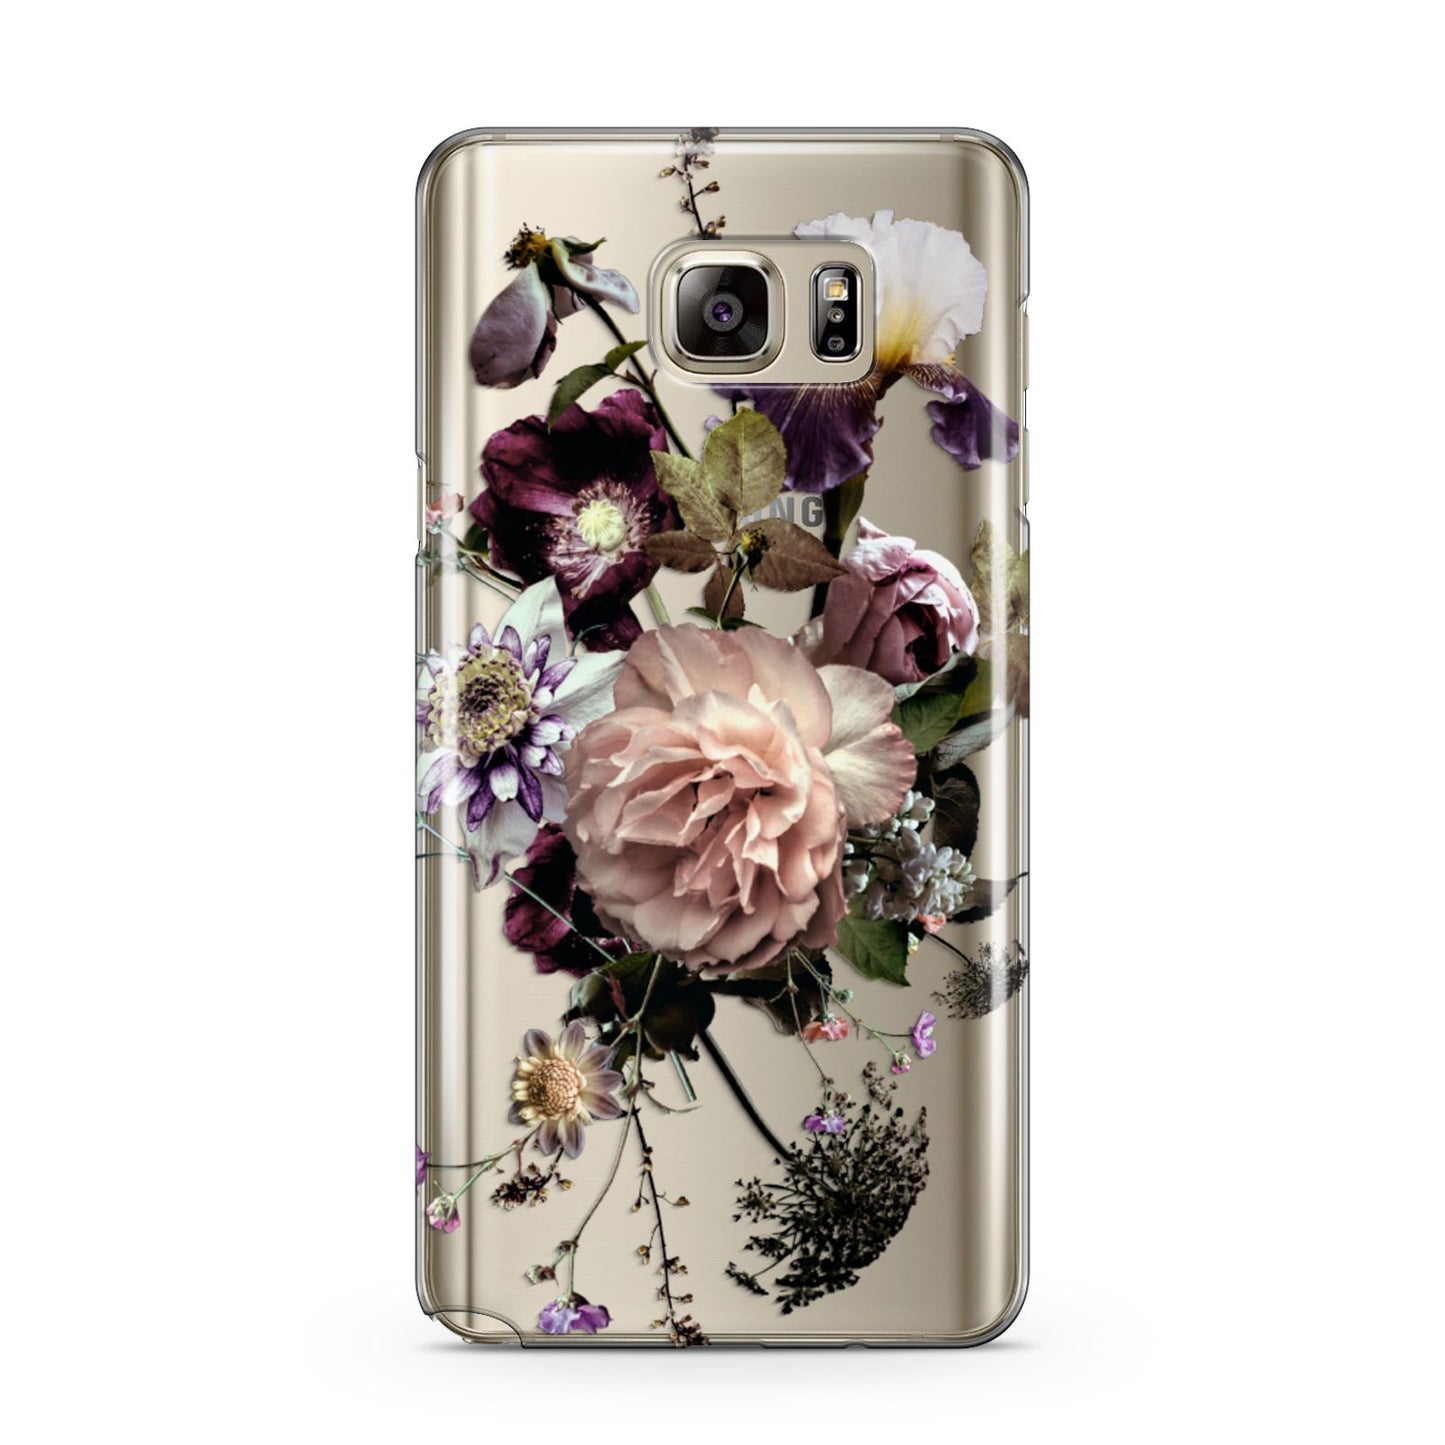 Vintage Flowers Samsung Galaxy Note 5 Case